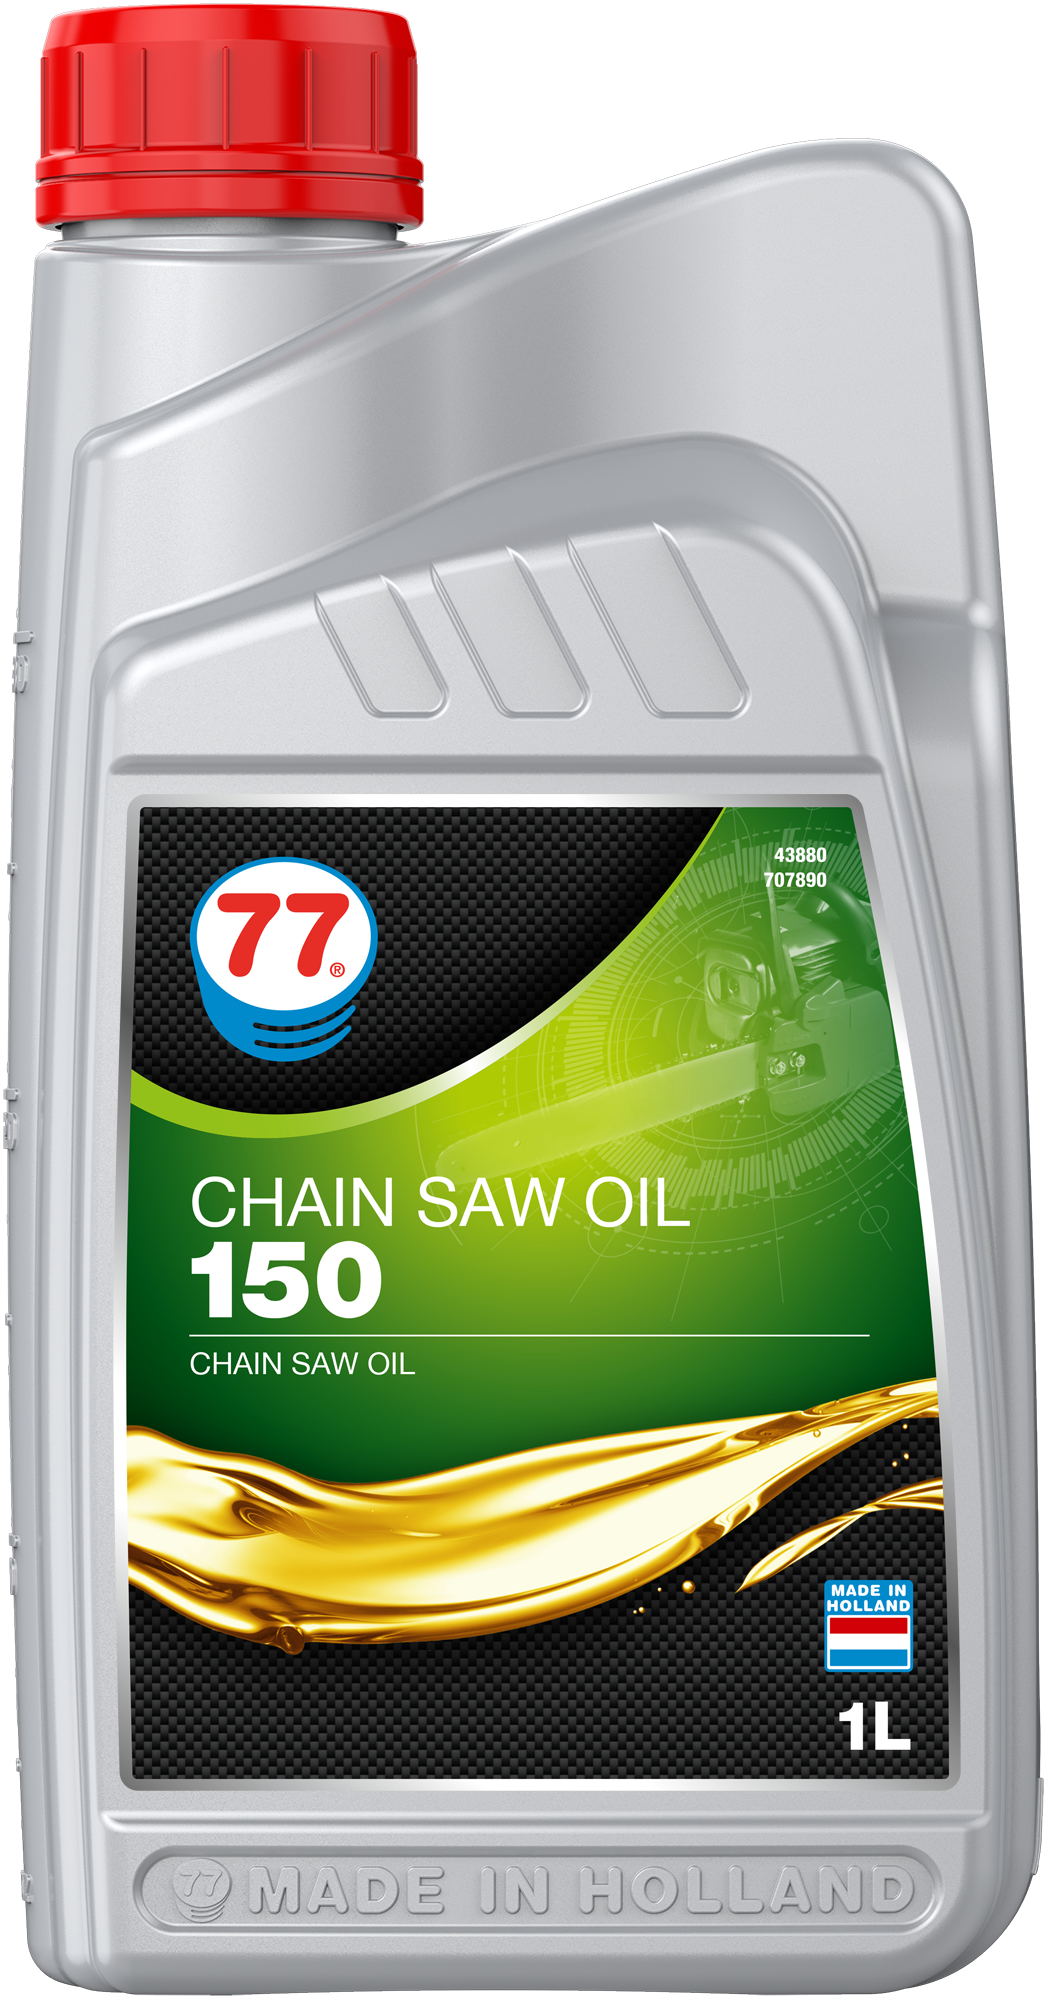 4388-1 Chain Saw Oil 150 van 77 lubricants is een olie van hoge kwaliteit die speciaal is ontwikkeld om de ketting van kettingzagen te smeren.